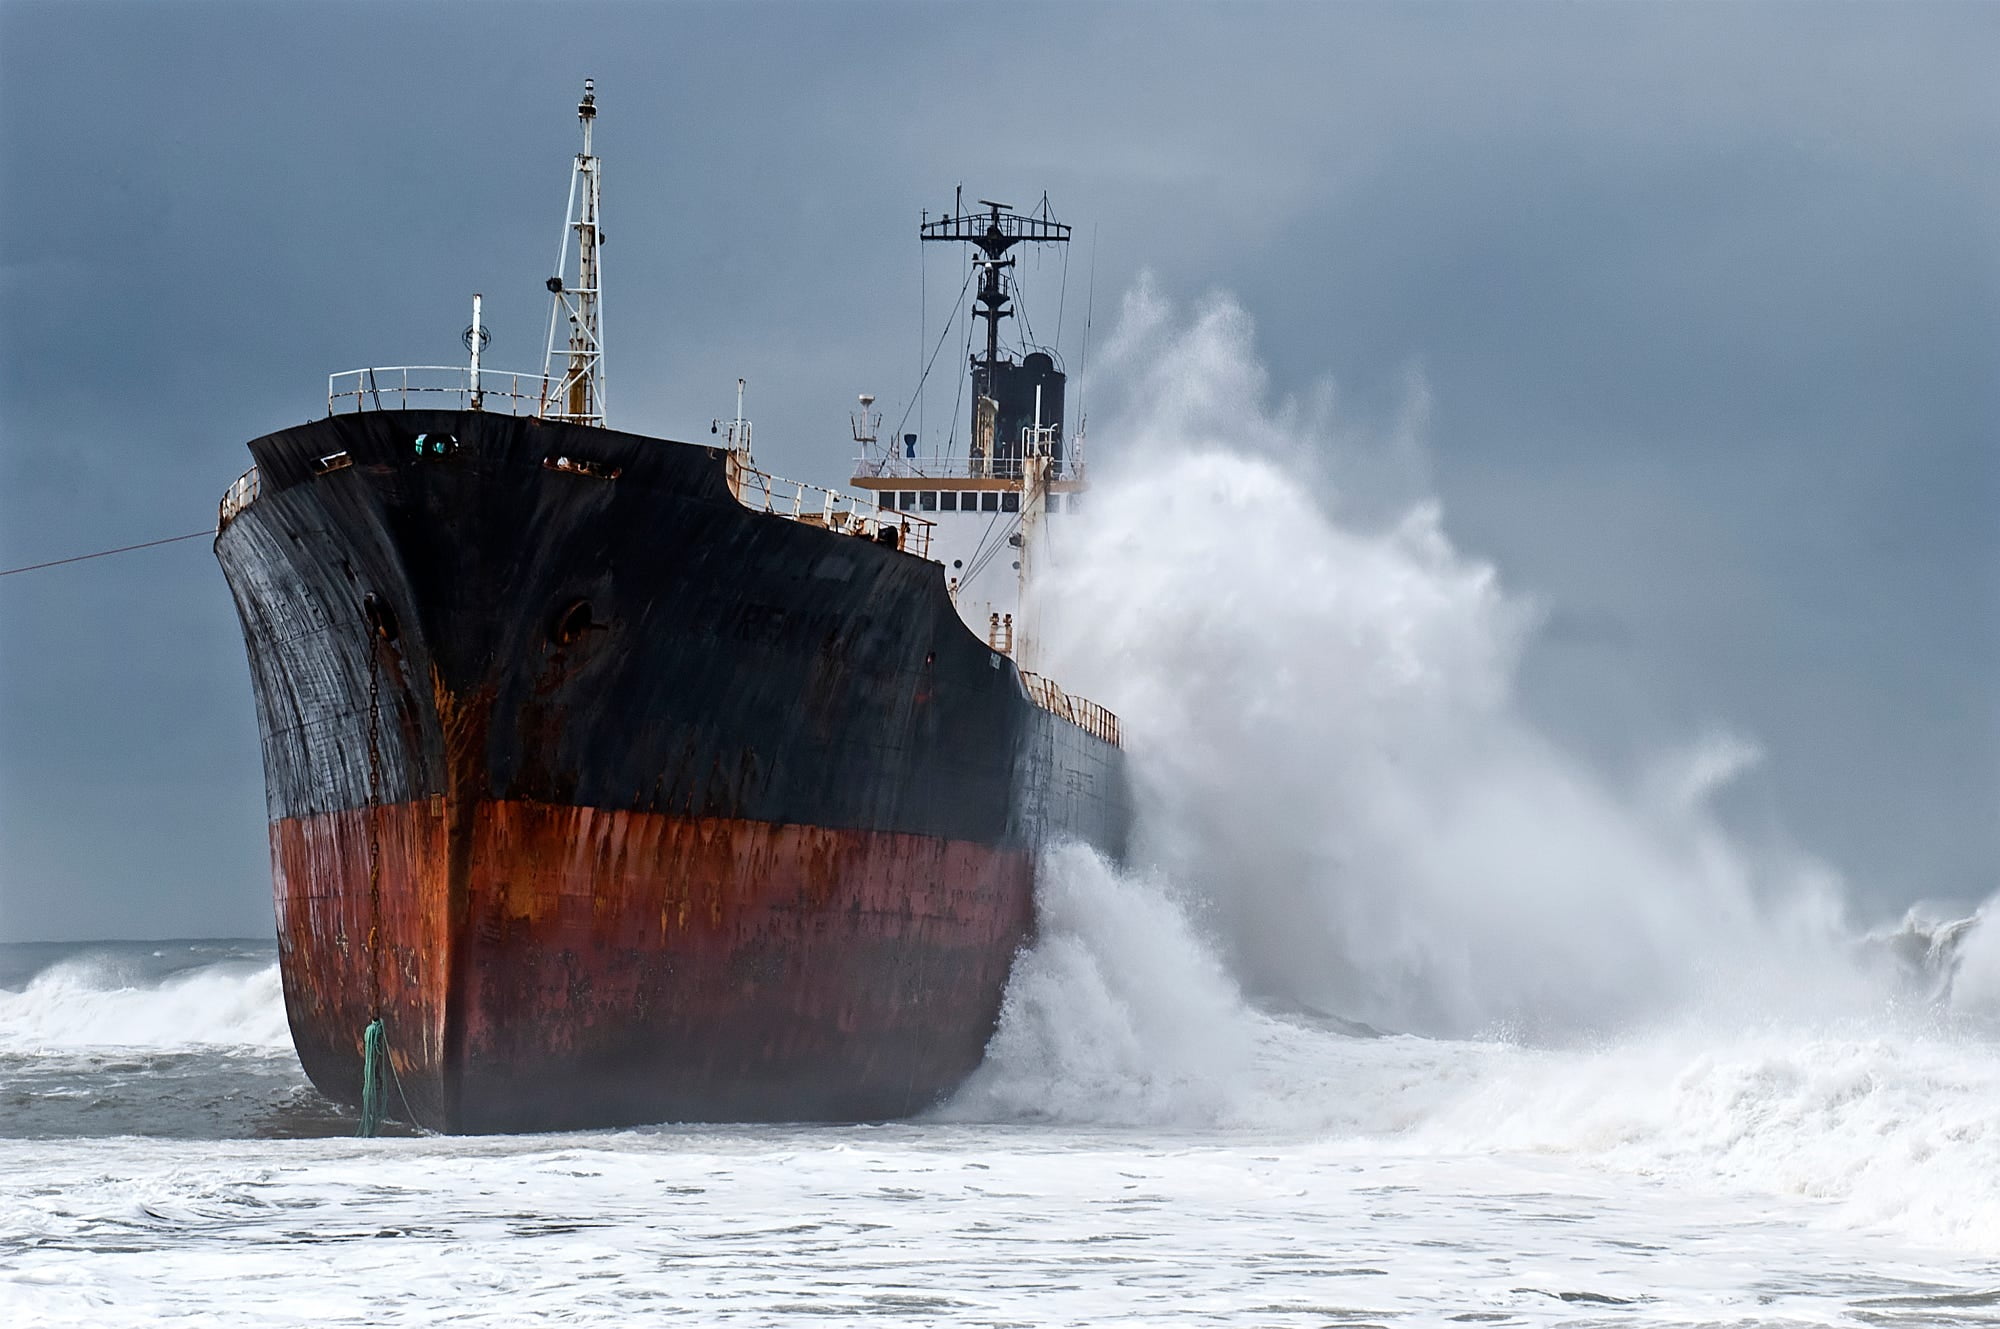 black and brown ship, waves, atlantic ocean, rain, storm, splashes